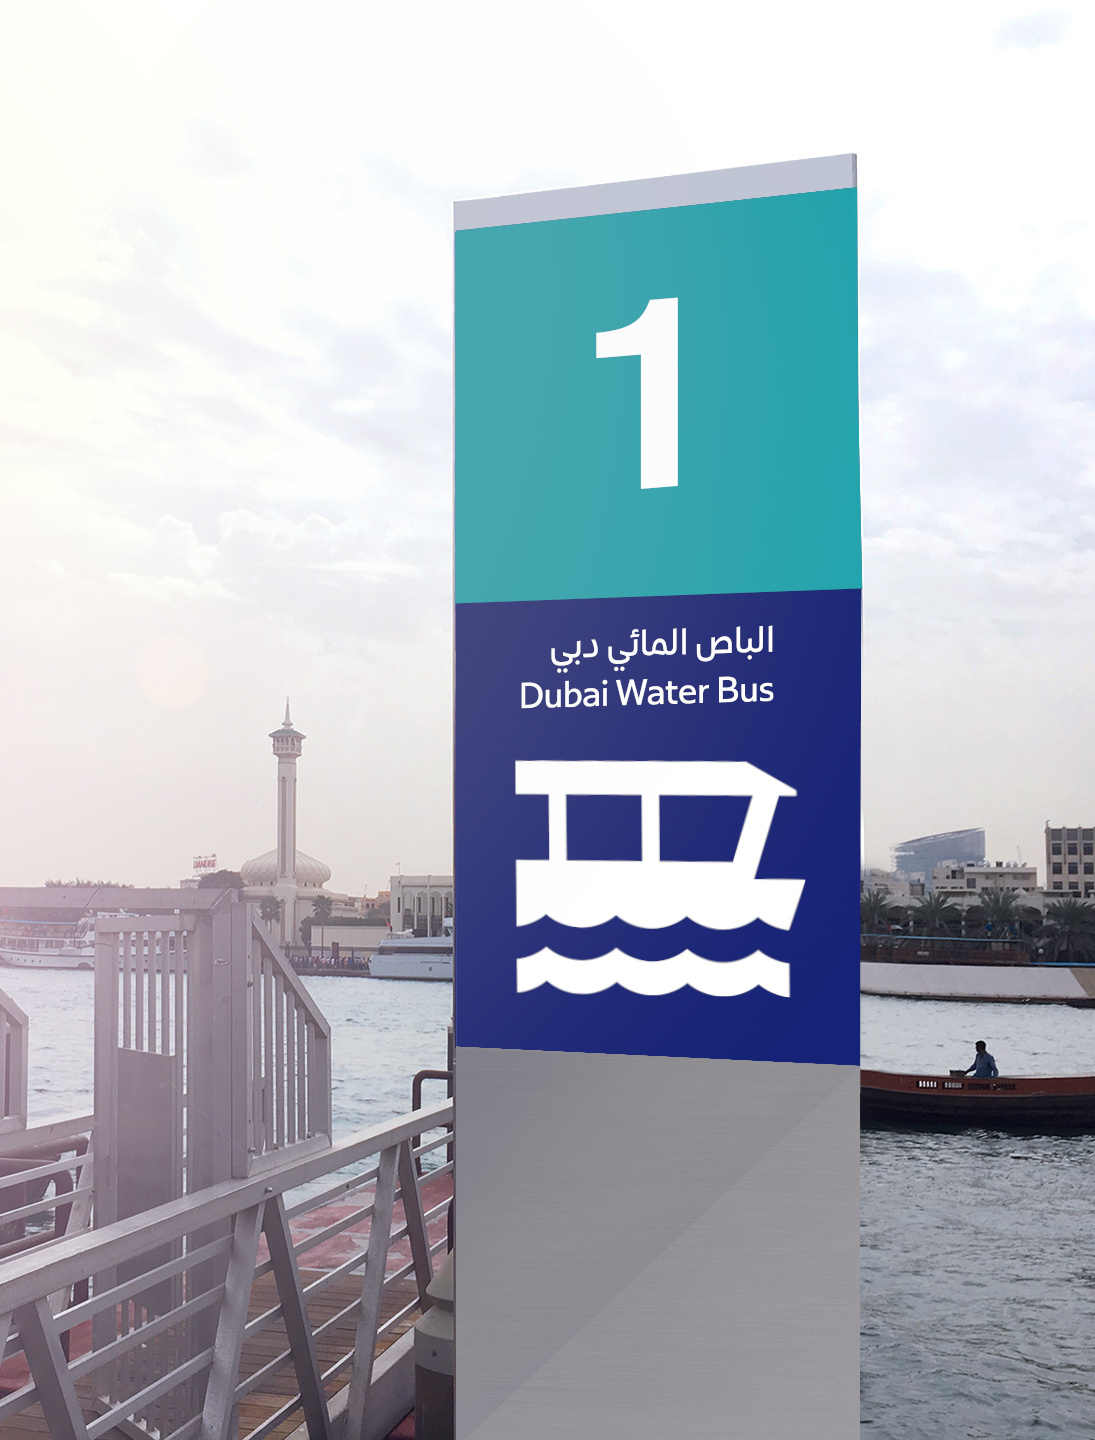 Dubai Water Bus Signage